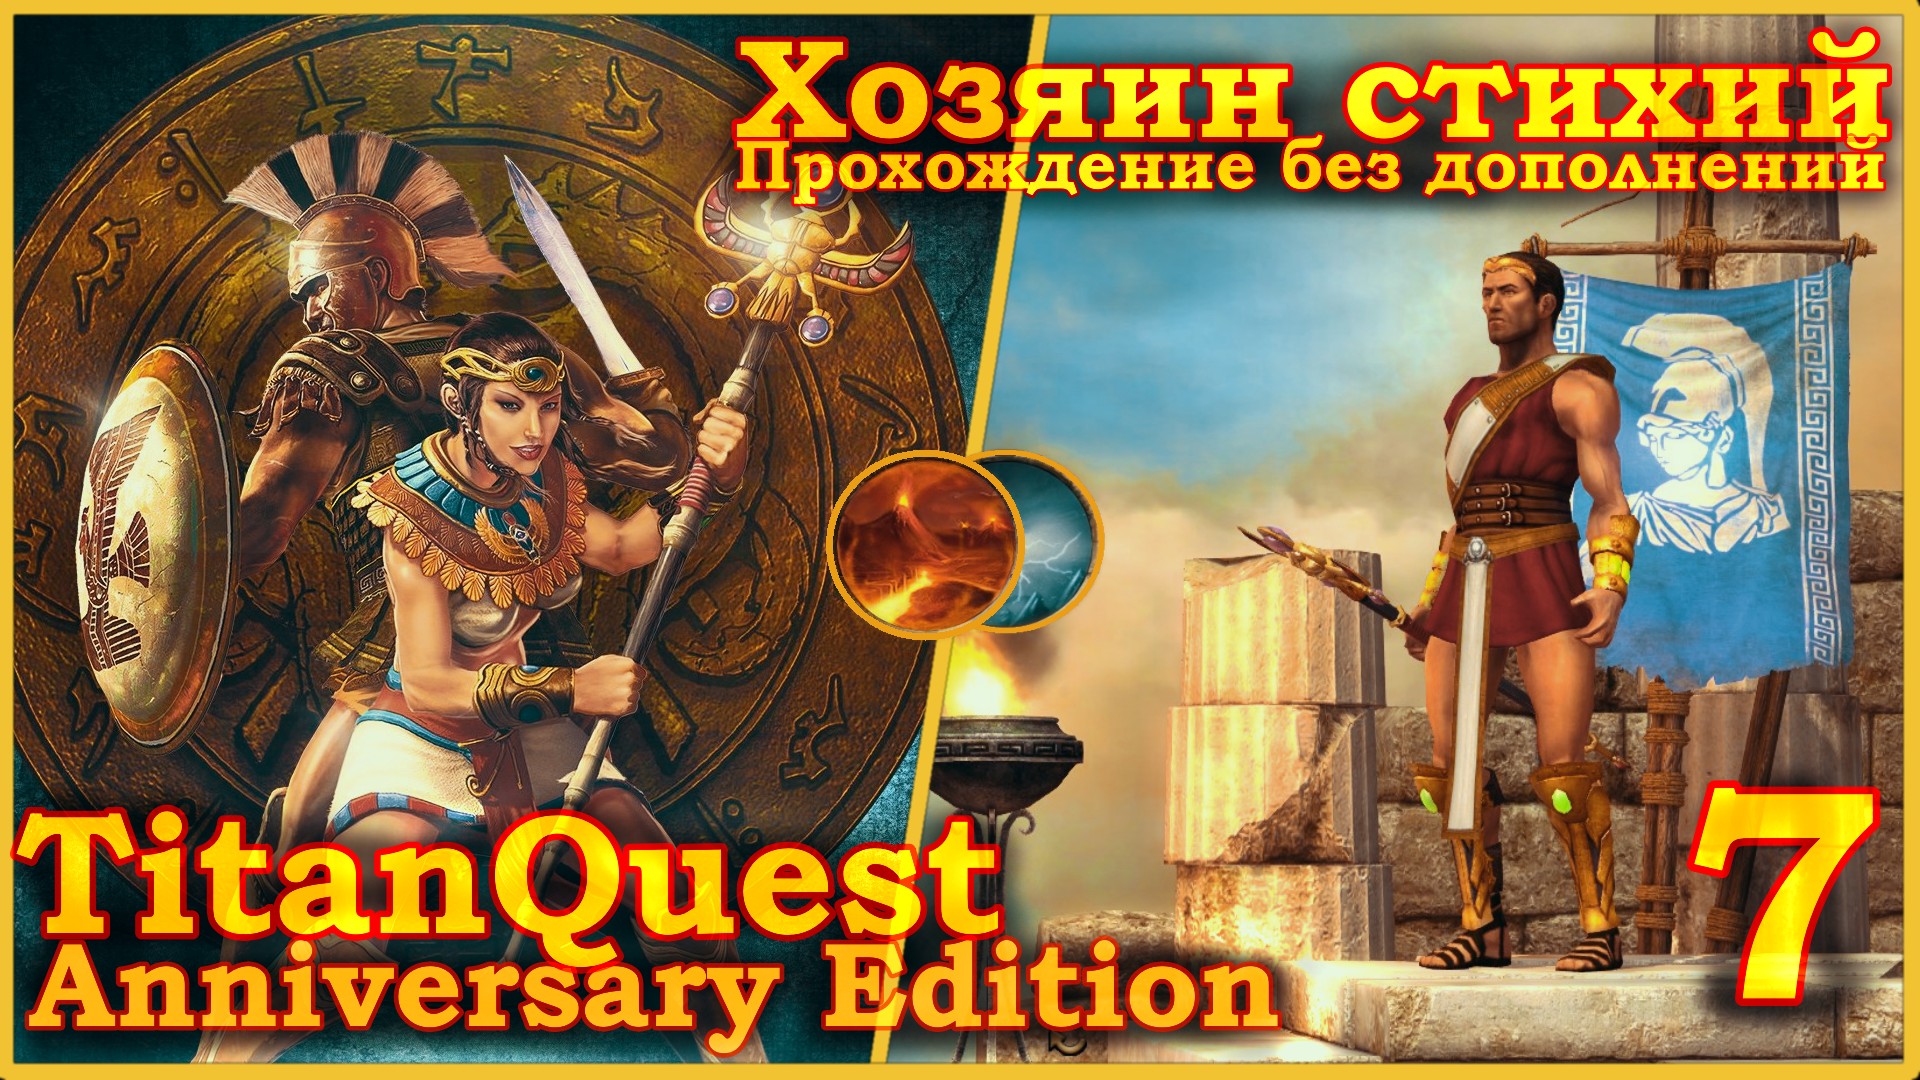 Titan Quest Anniversary Edition. Греция. Норма - Хозяин стихий(Земля + Воздух) - 7ч.